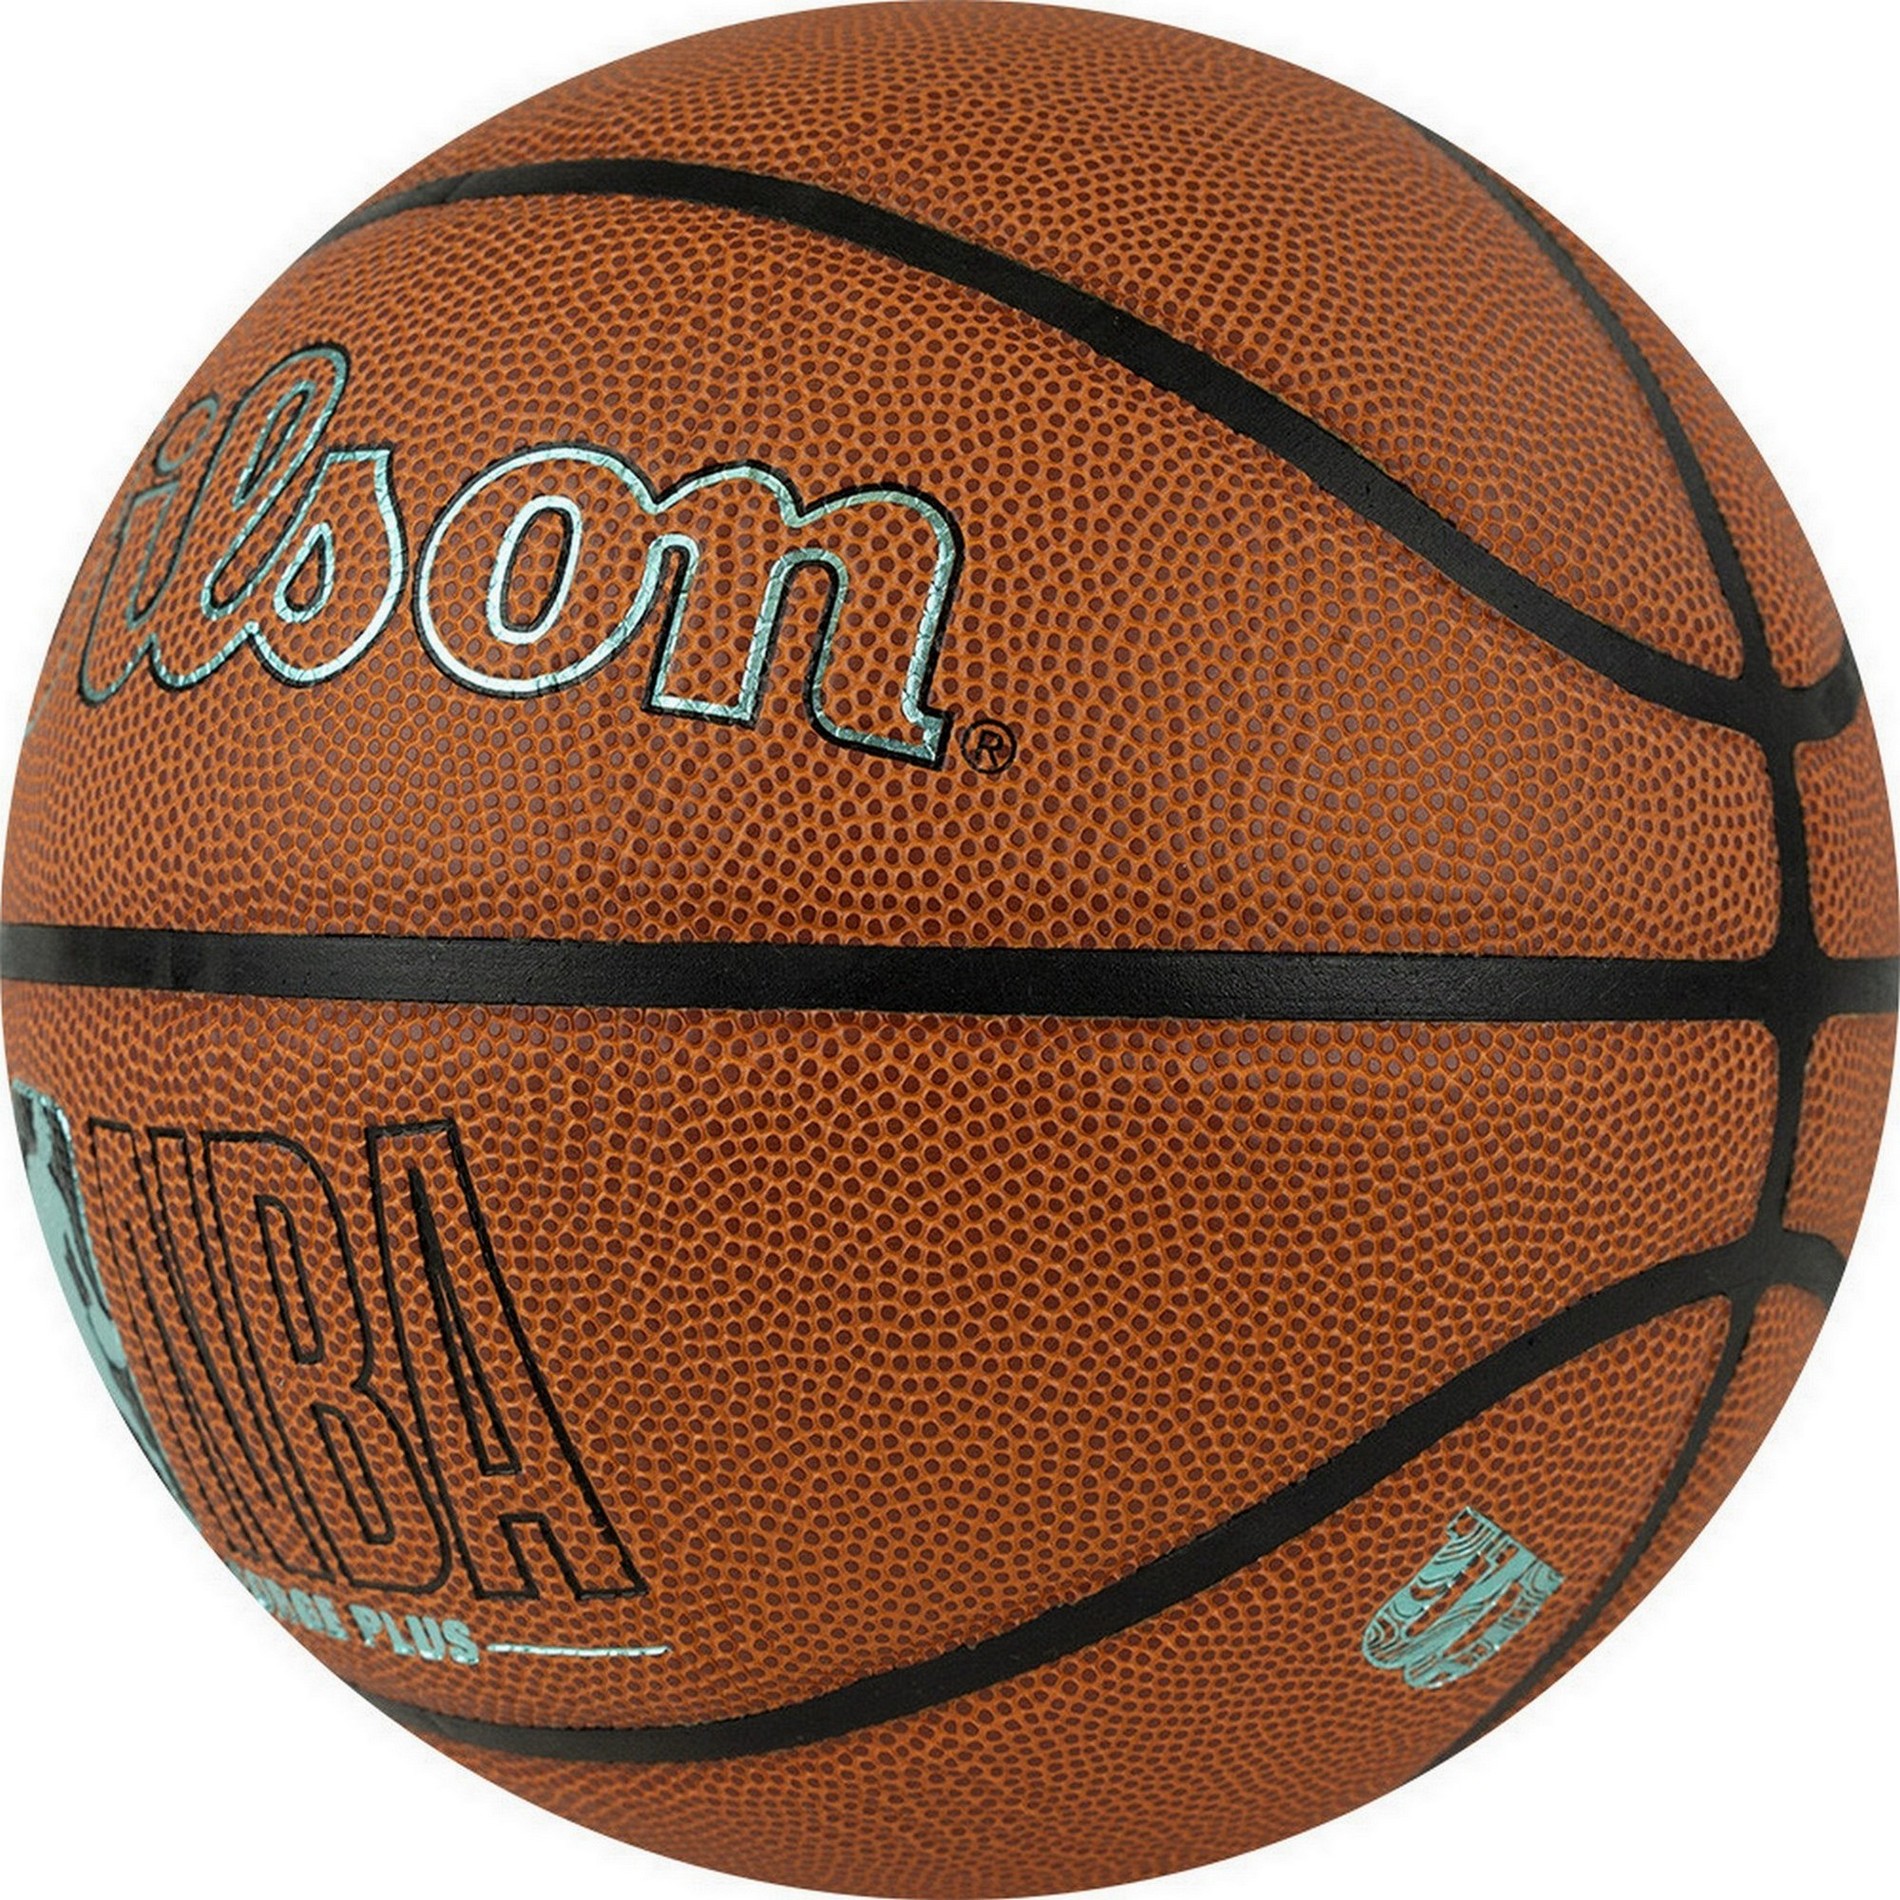 Мяч баскетбольный Wilson NBA FORGE PLUS ECO BSKT WZ2010901XB7 р.7 1900_1900